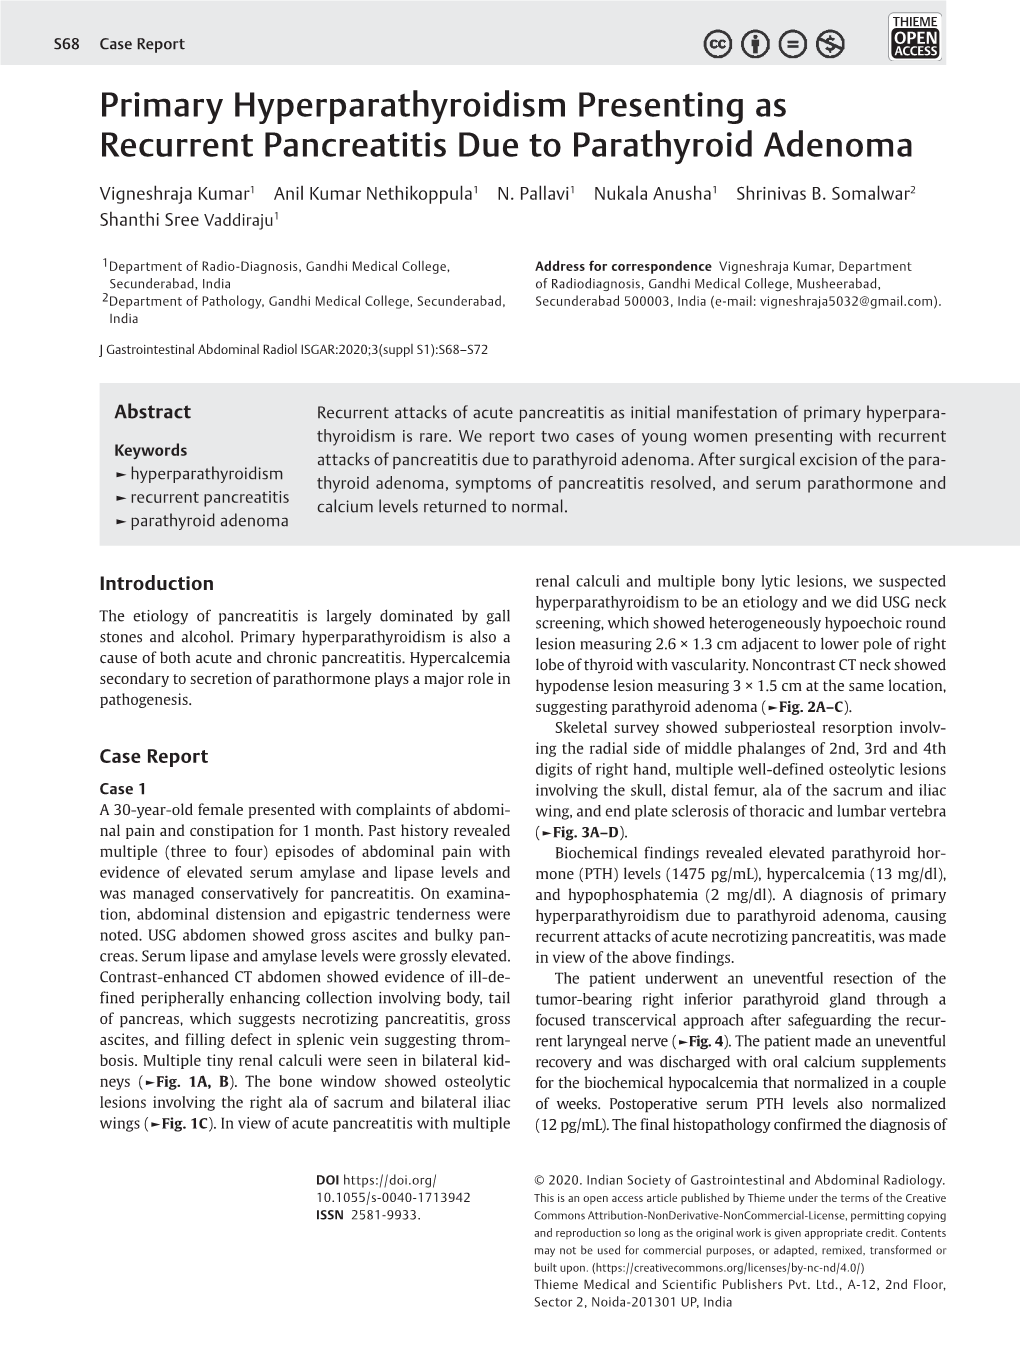 Primary Hyperparathyroidism Presenting As Recurrent Pancreatitis Due to Parathyroid Adenoma